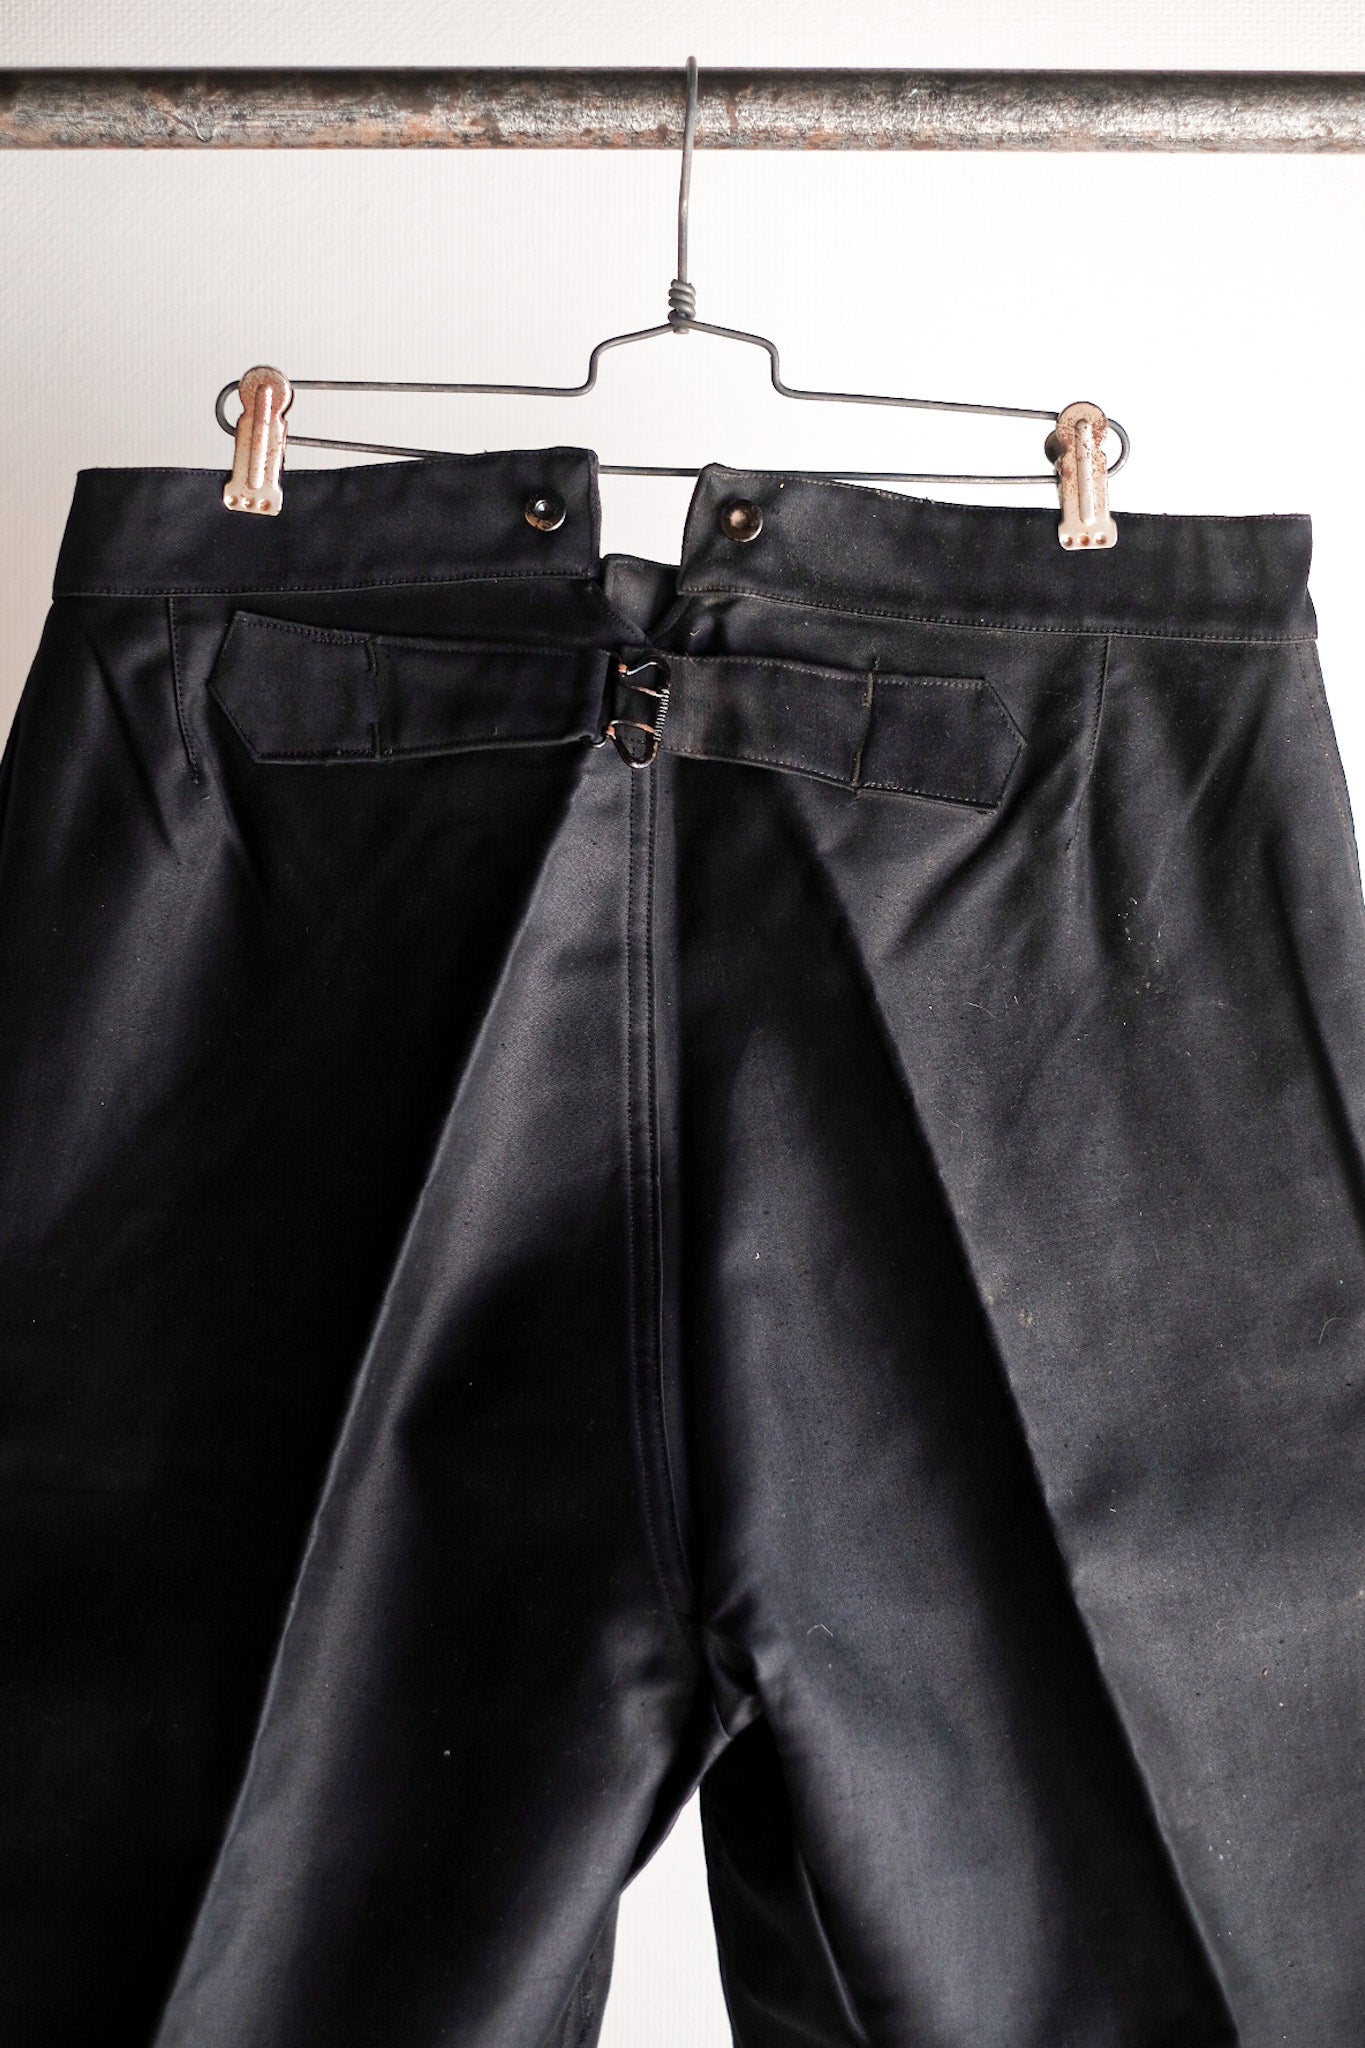 [~ 40's] French Vintage Black Moleskin Work Pants "Adolphe Lafont" "Dead Stock"